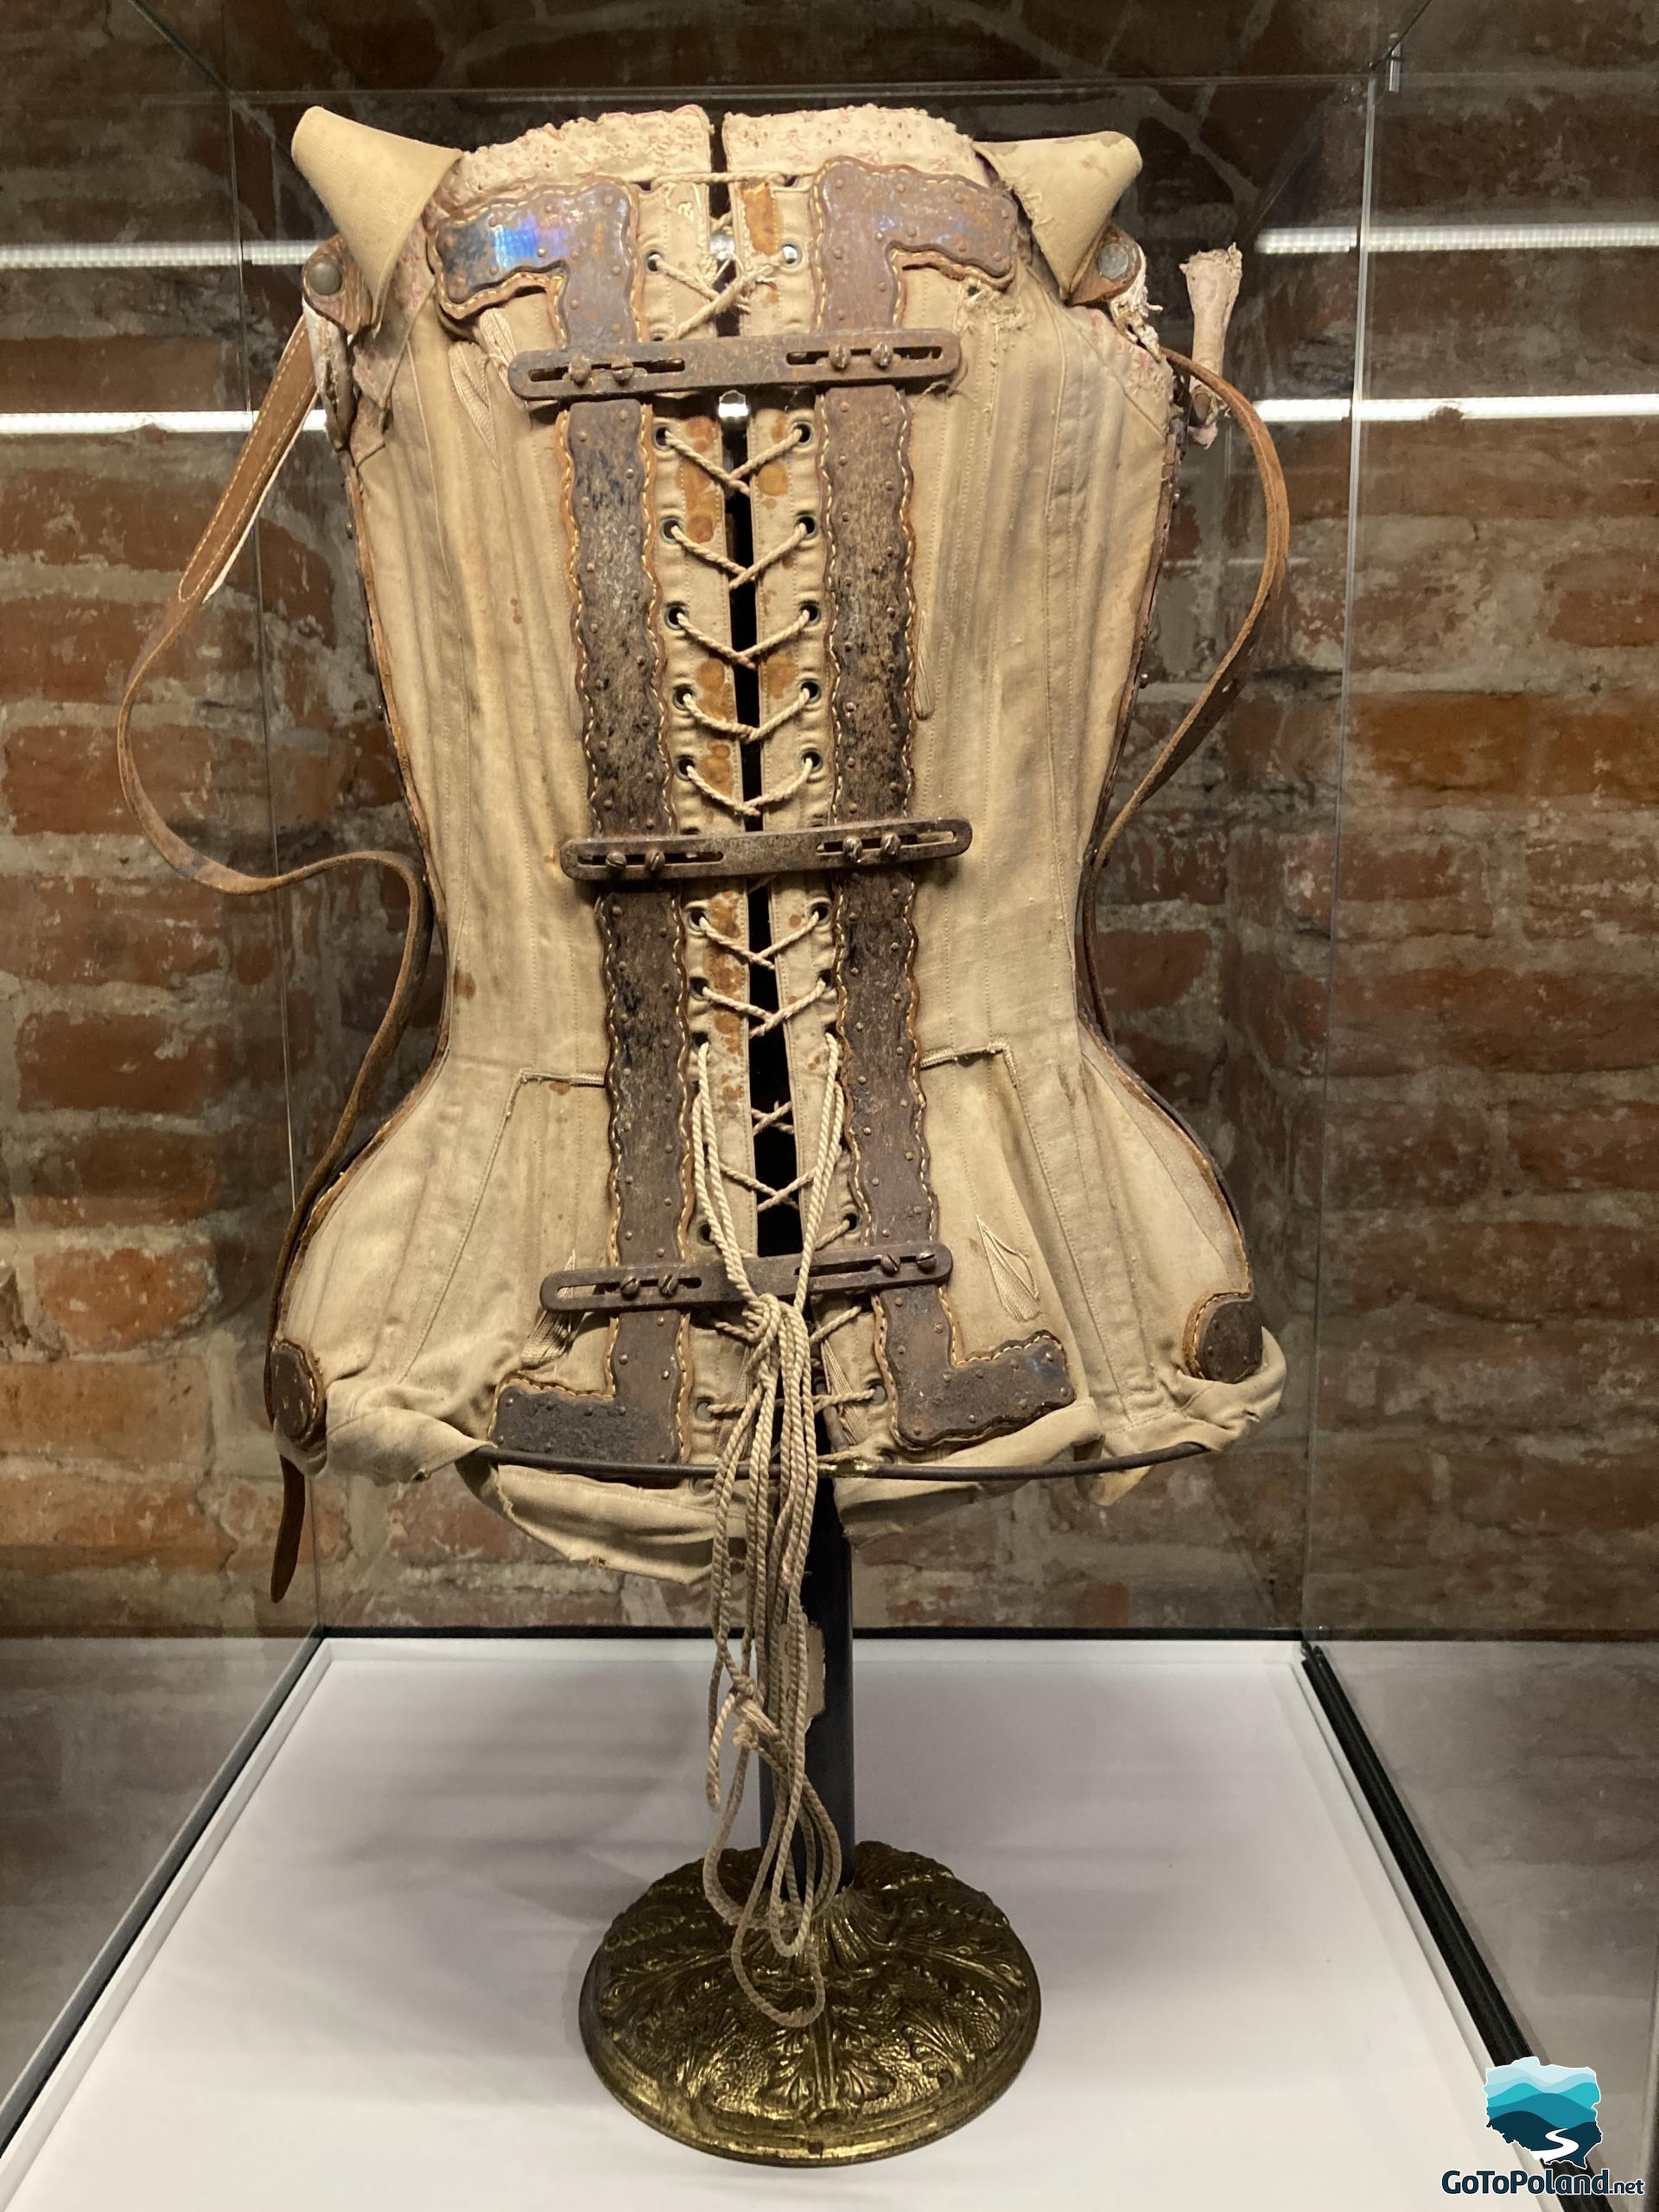 old corset on display